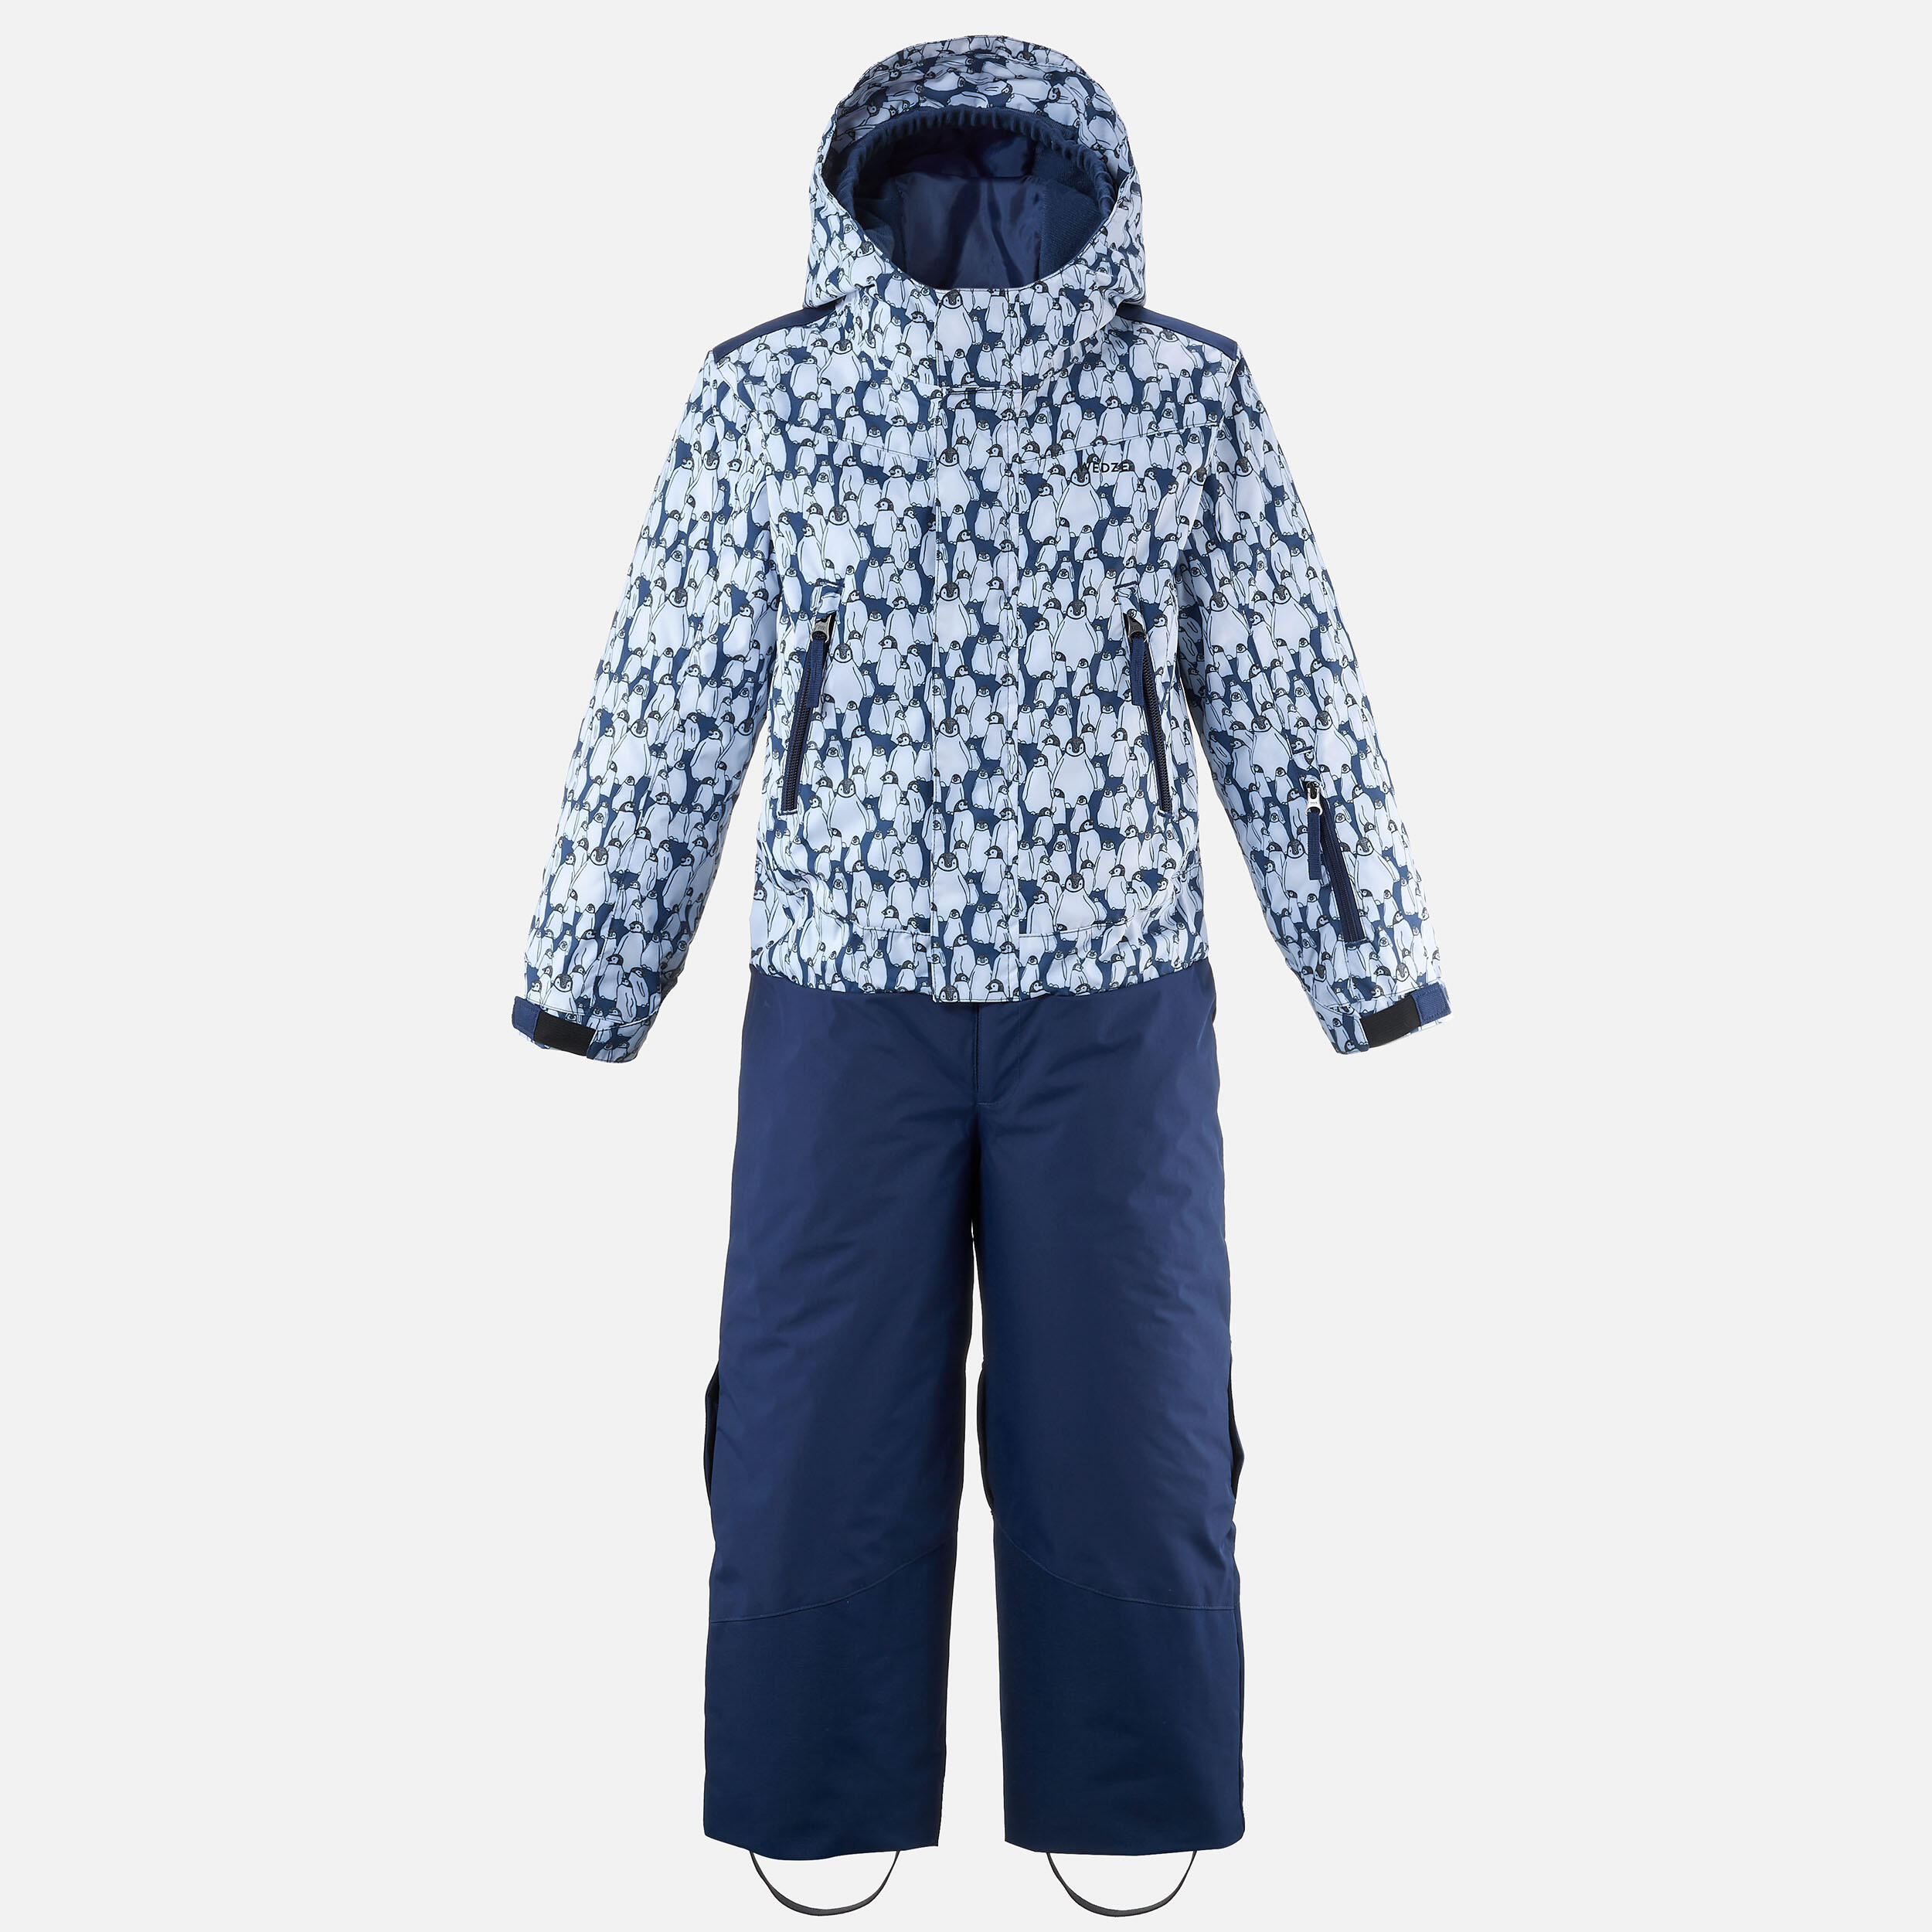 Kids’ Warm and Waterproof Ski Suit PNF 500 - Penguins 8/8